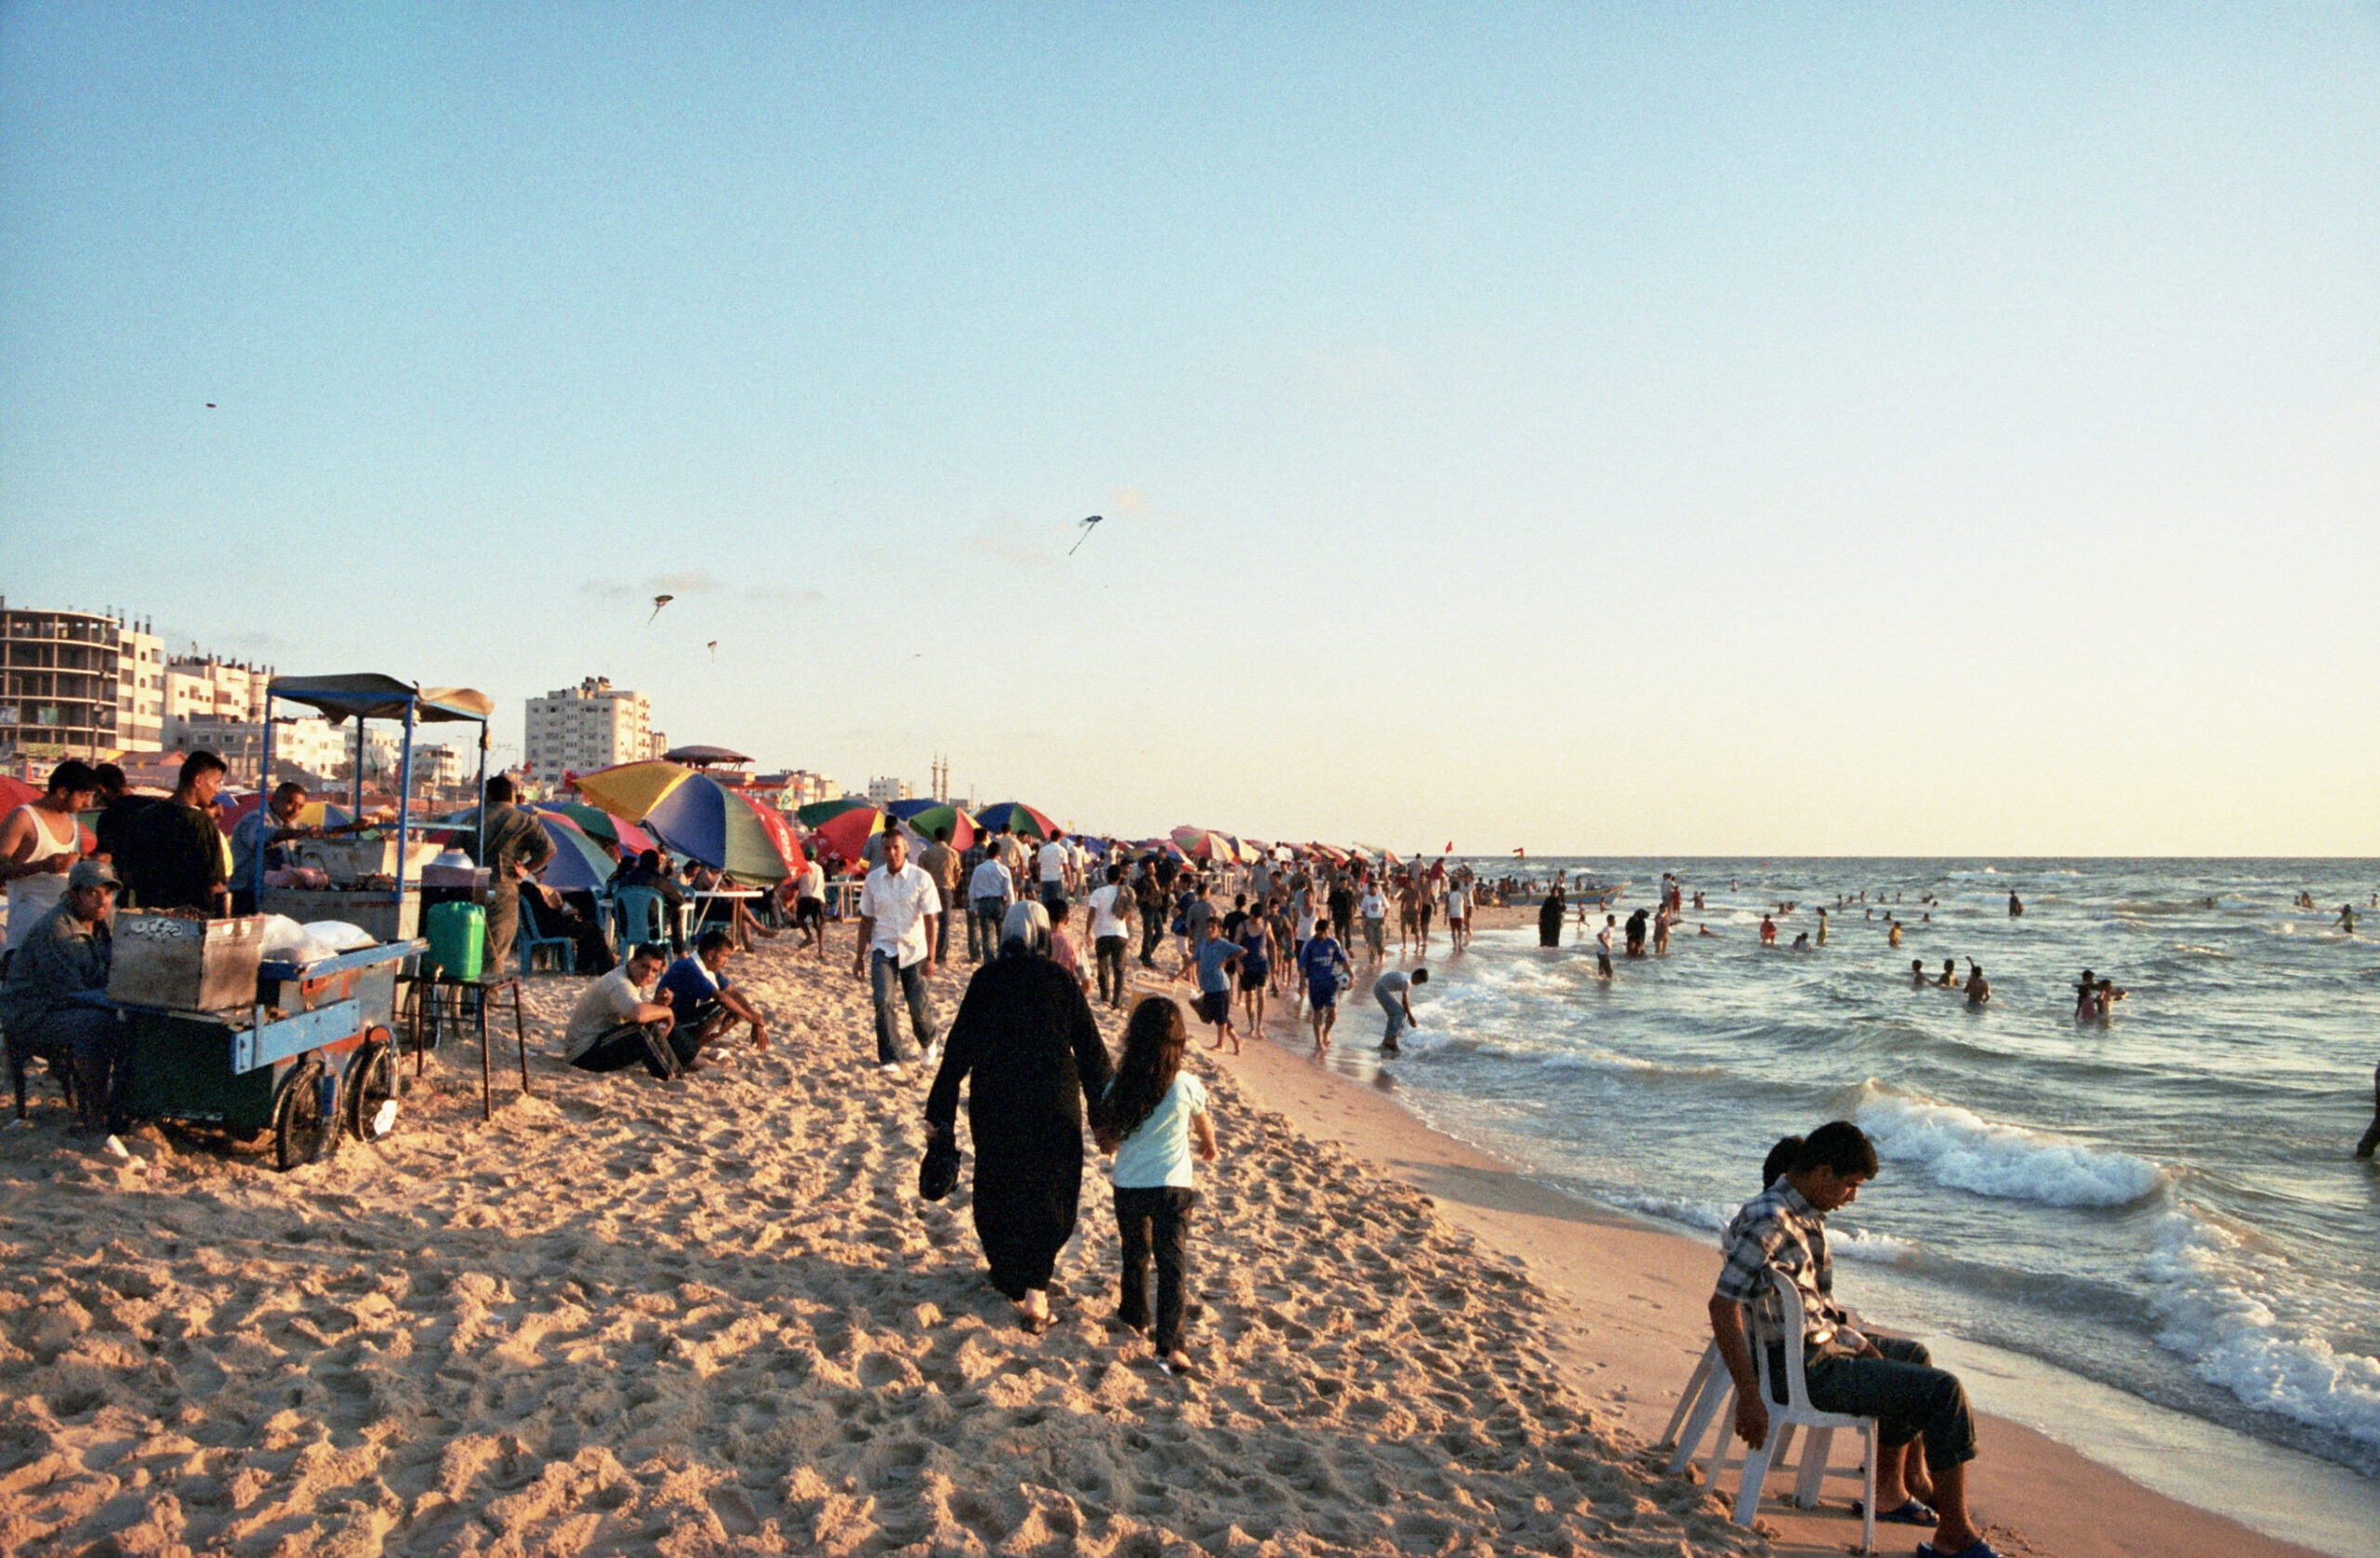 Gaza Mediterranian beach - looking ahead to the day after the Israel Gaza war